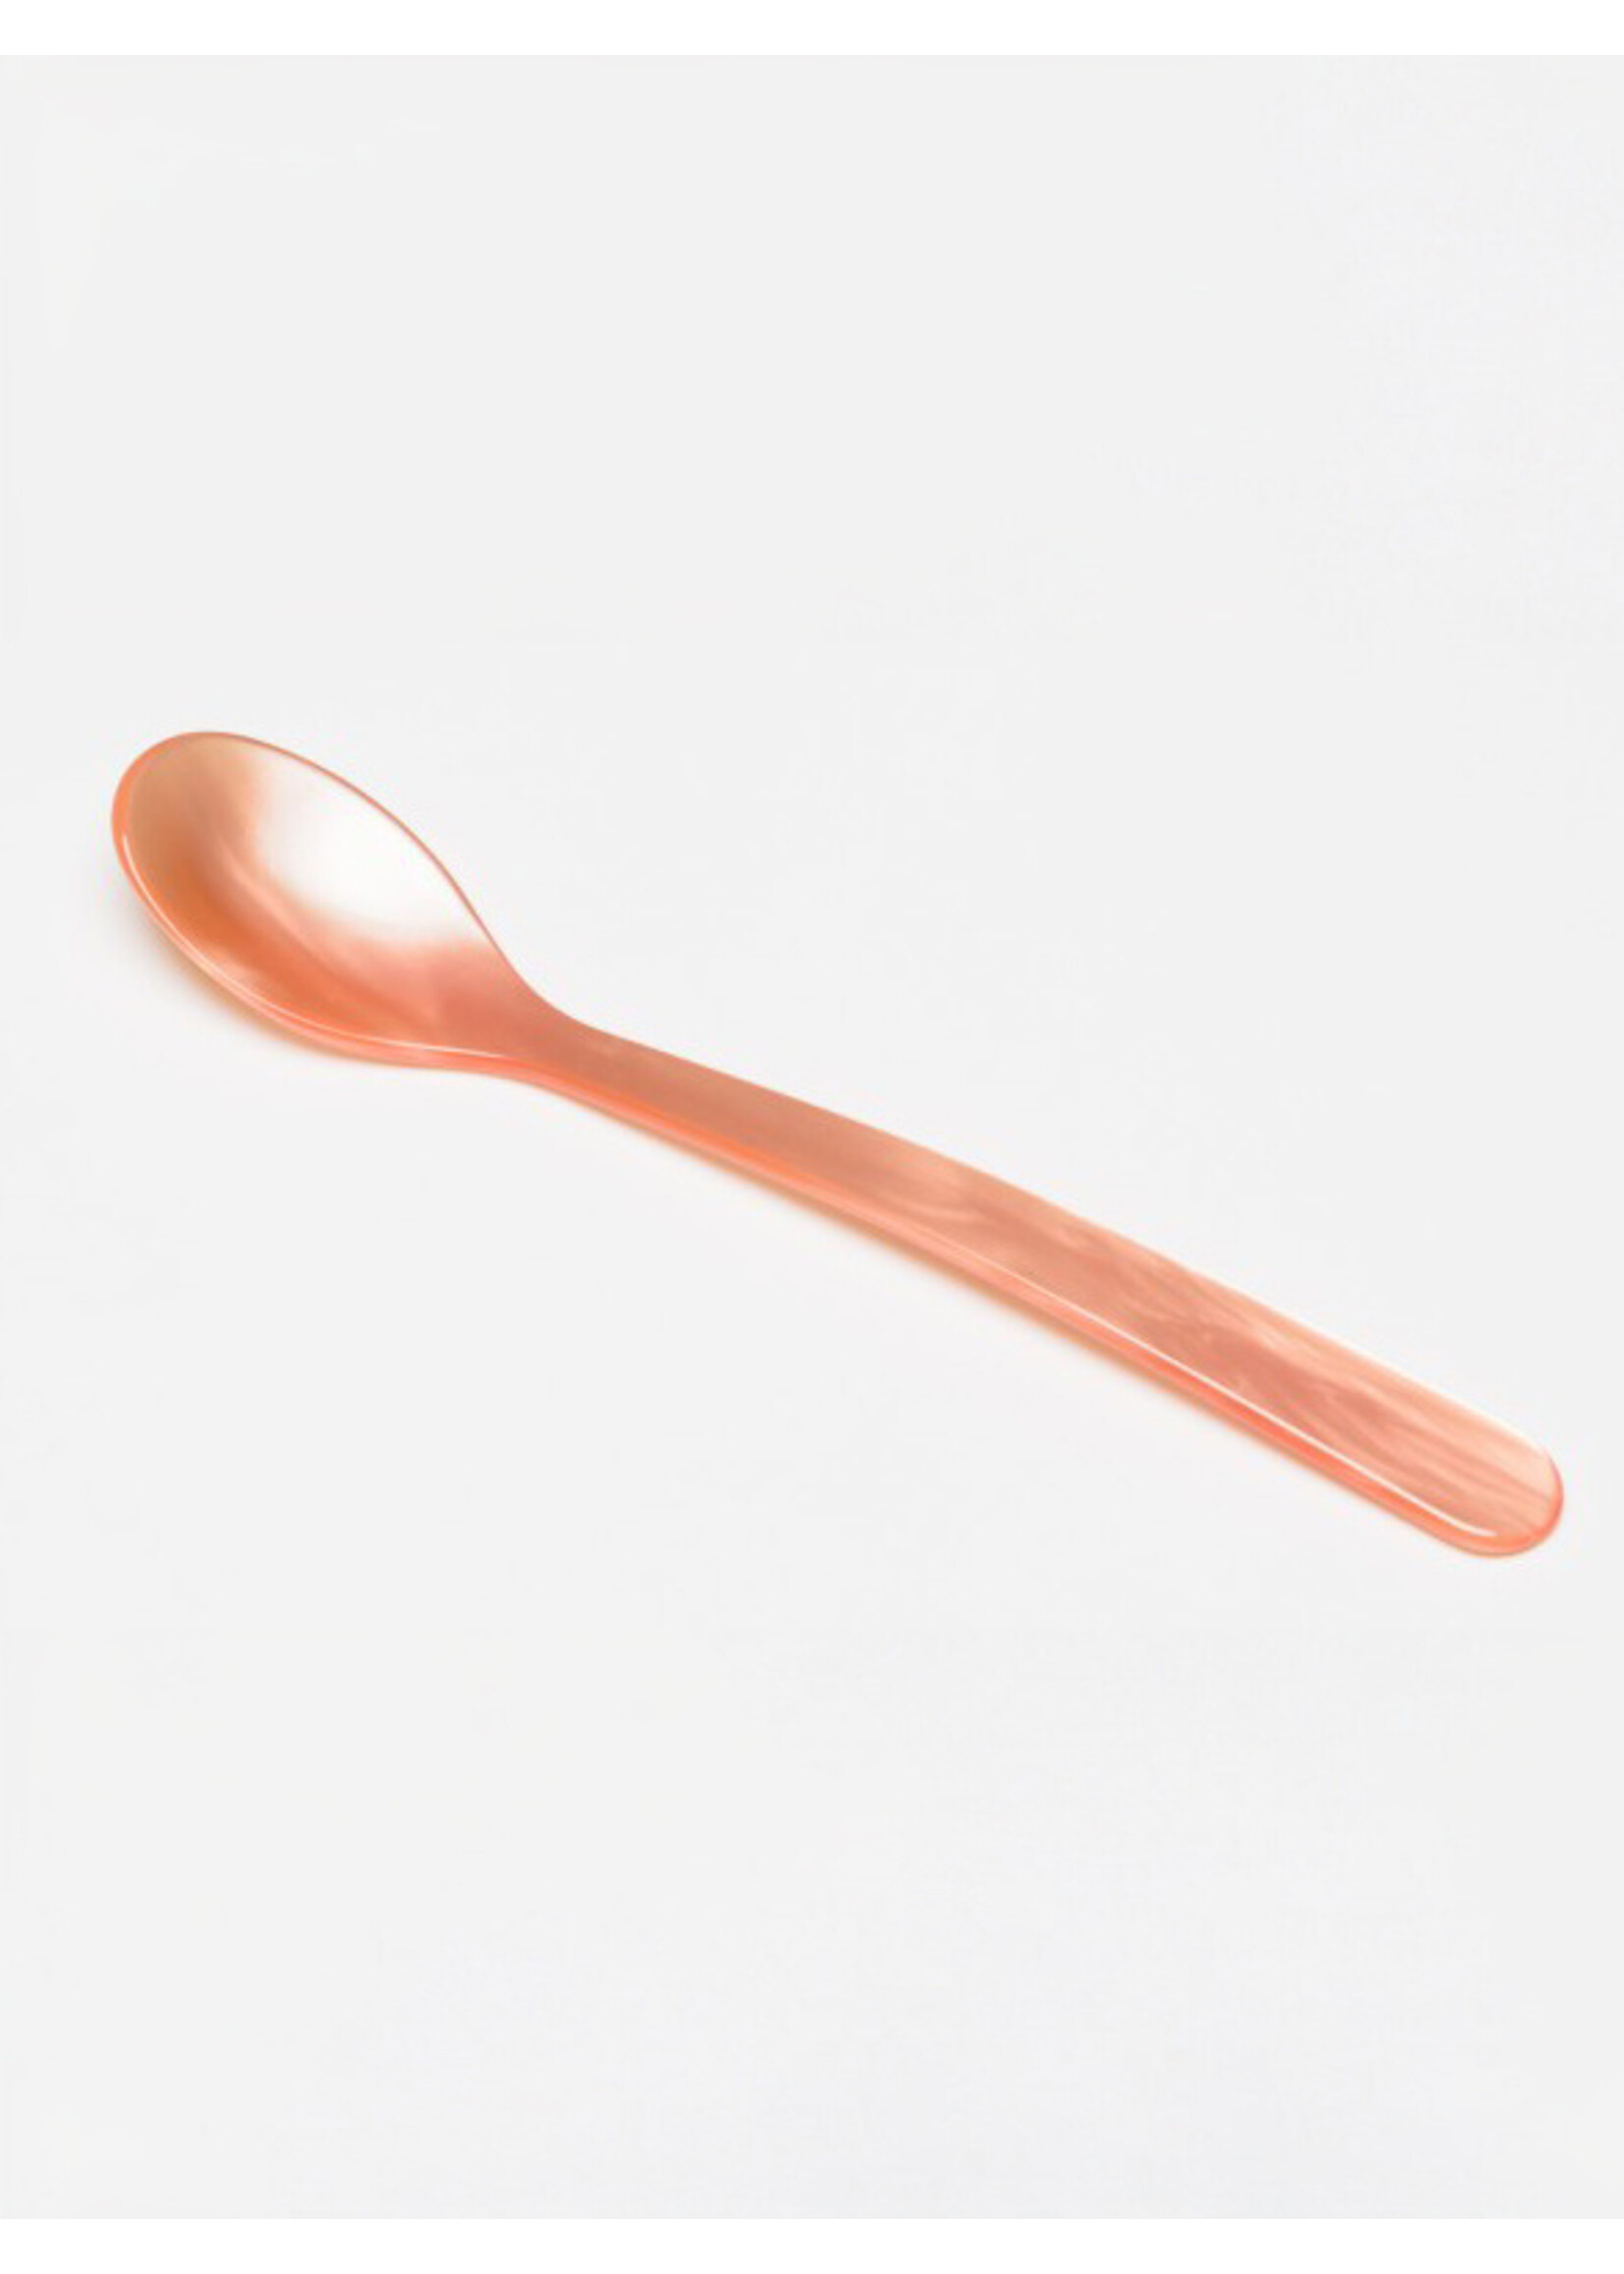 Heim Sohne Table spoons by Heim Söhne